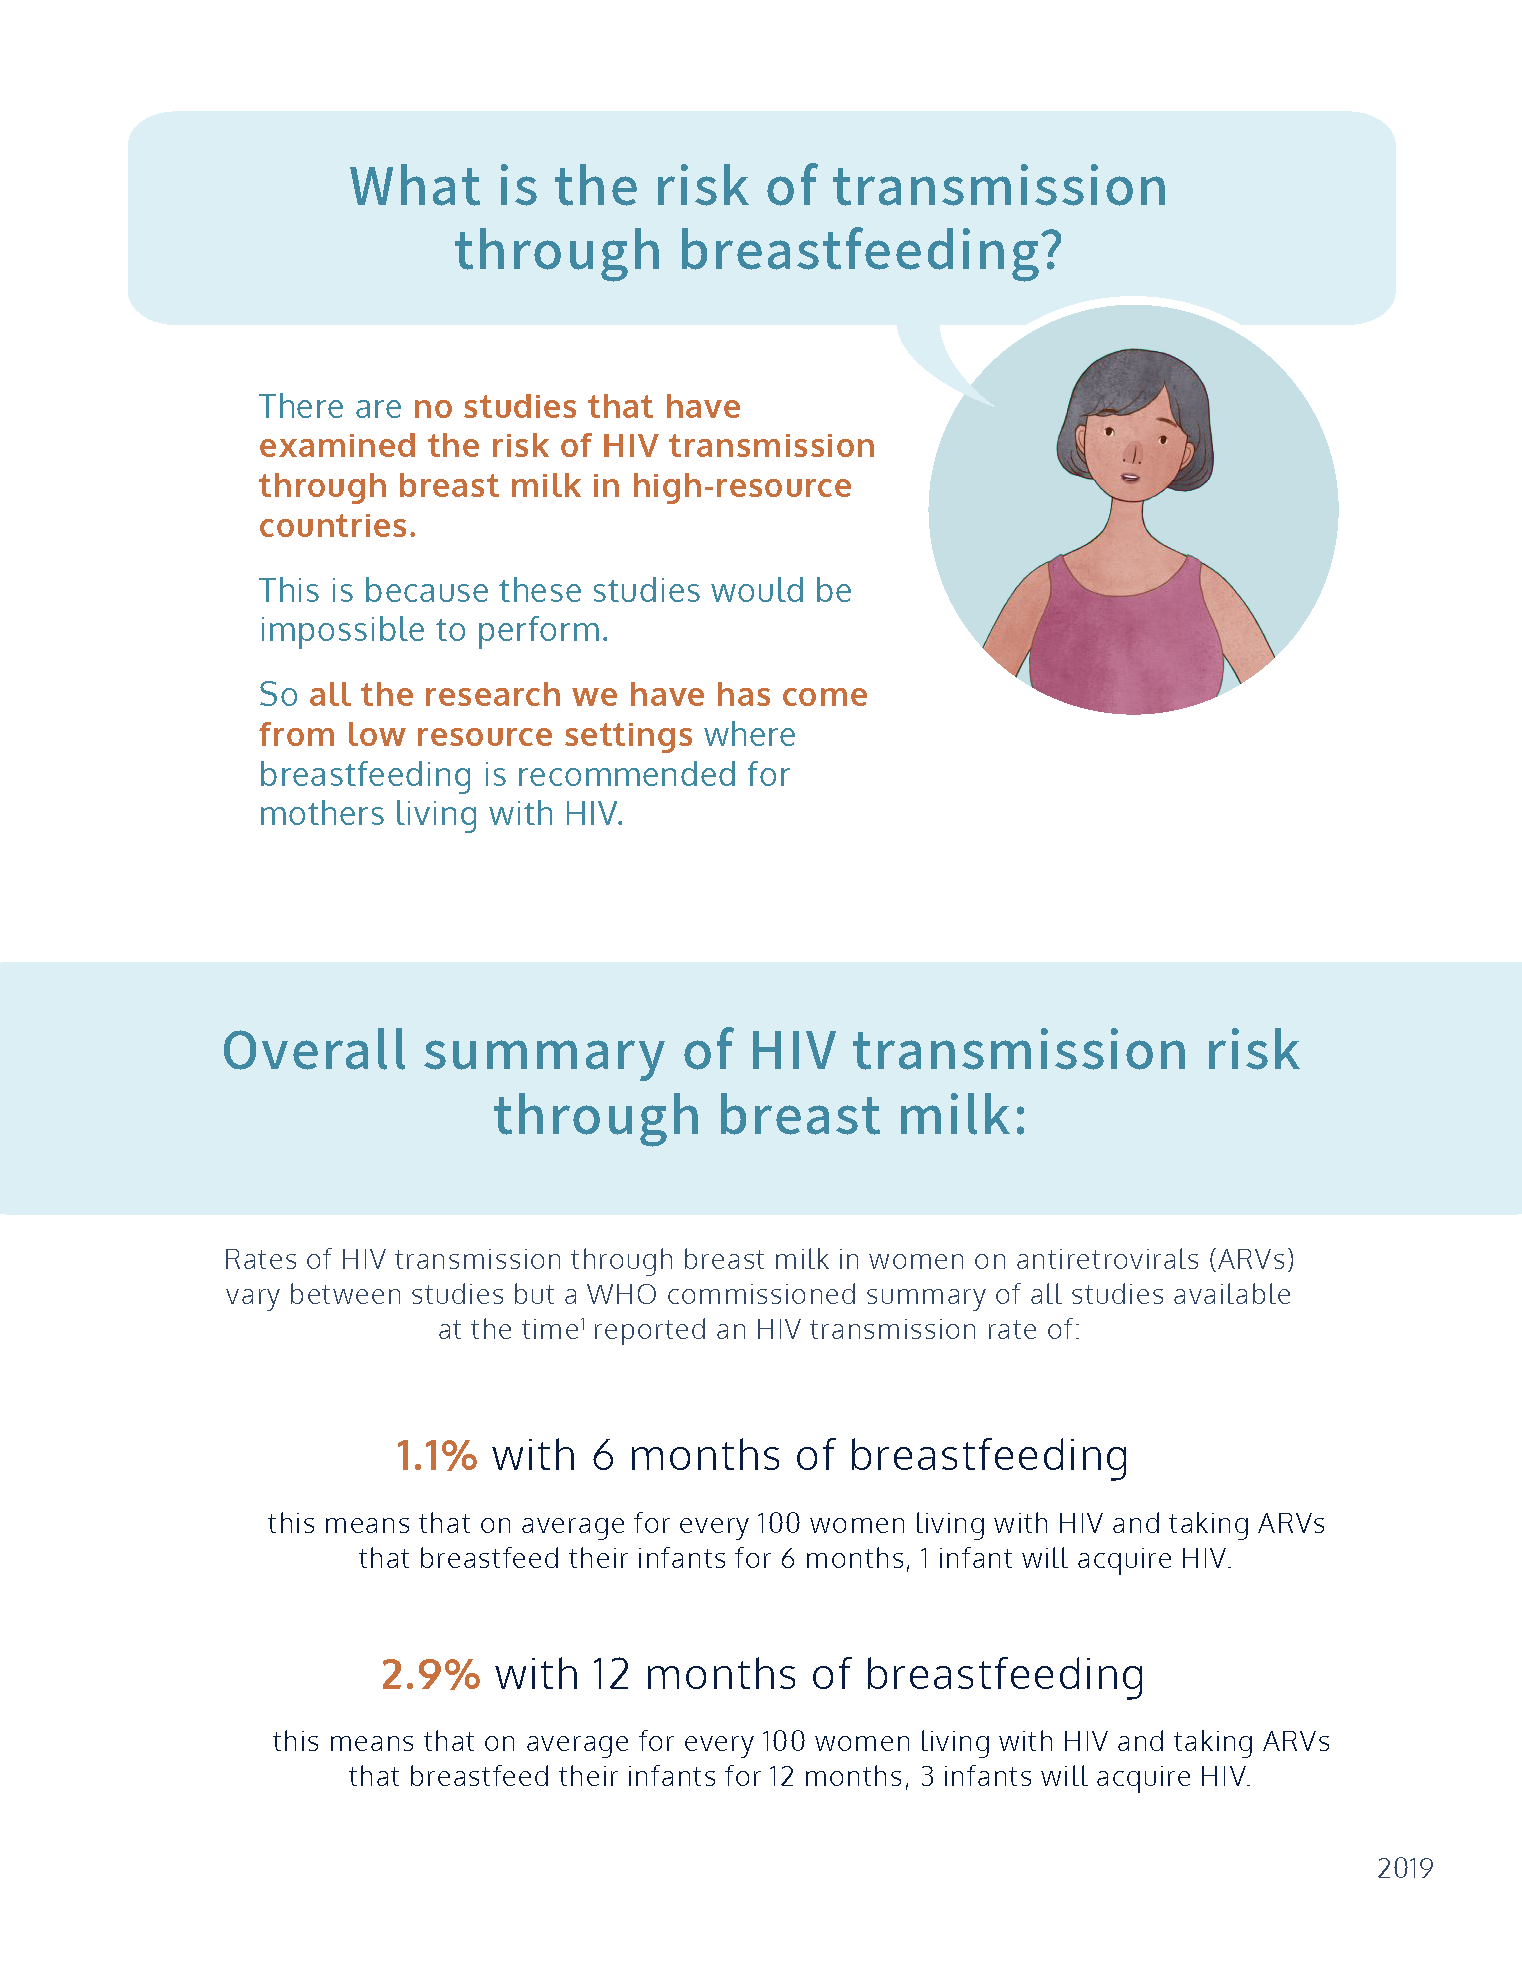 Info on Transmission Risk Through Breastfeeding